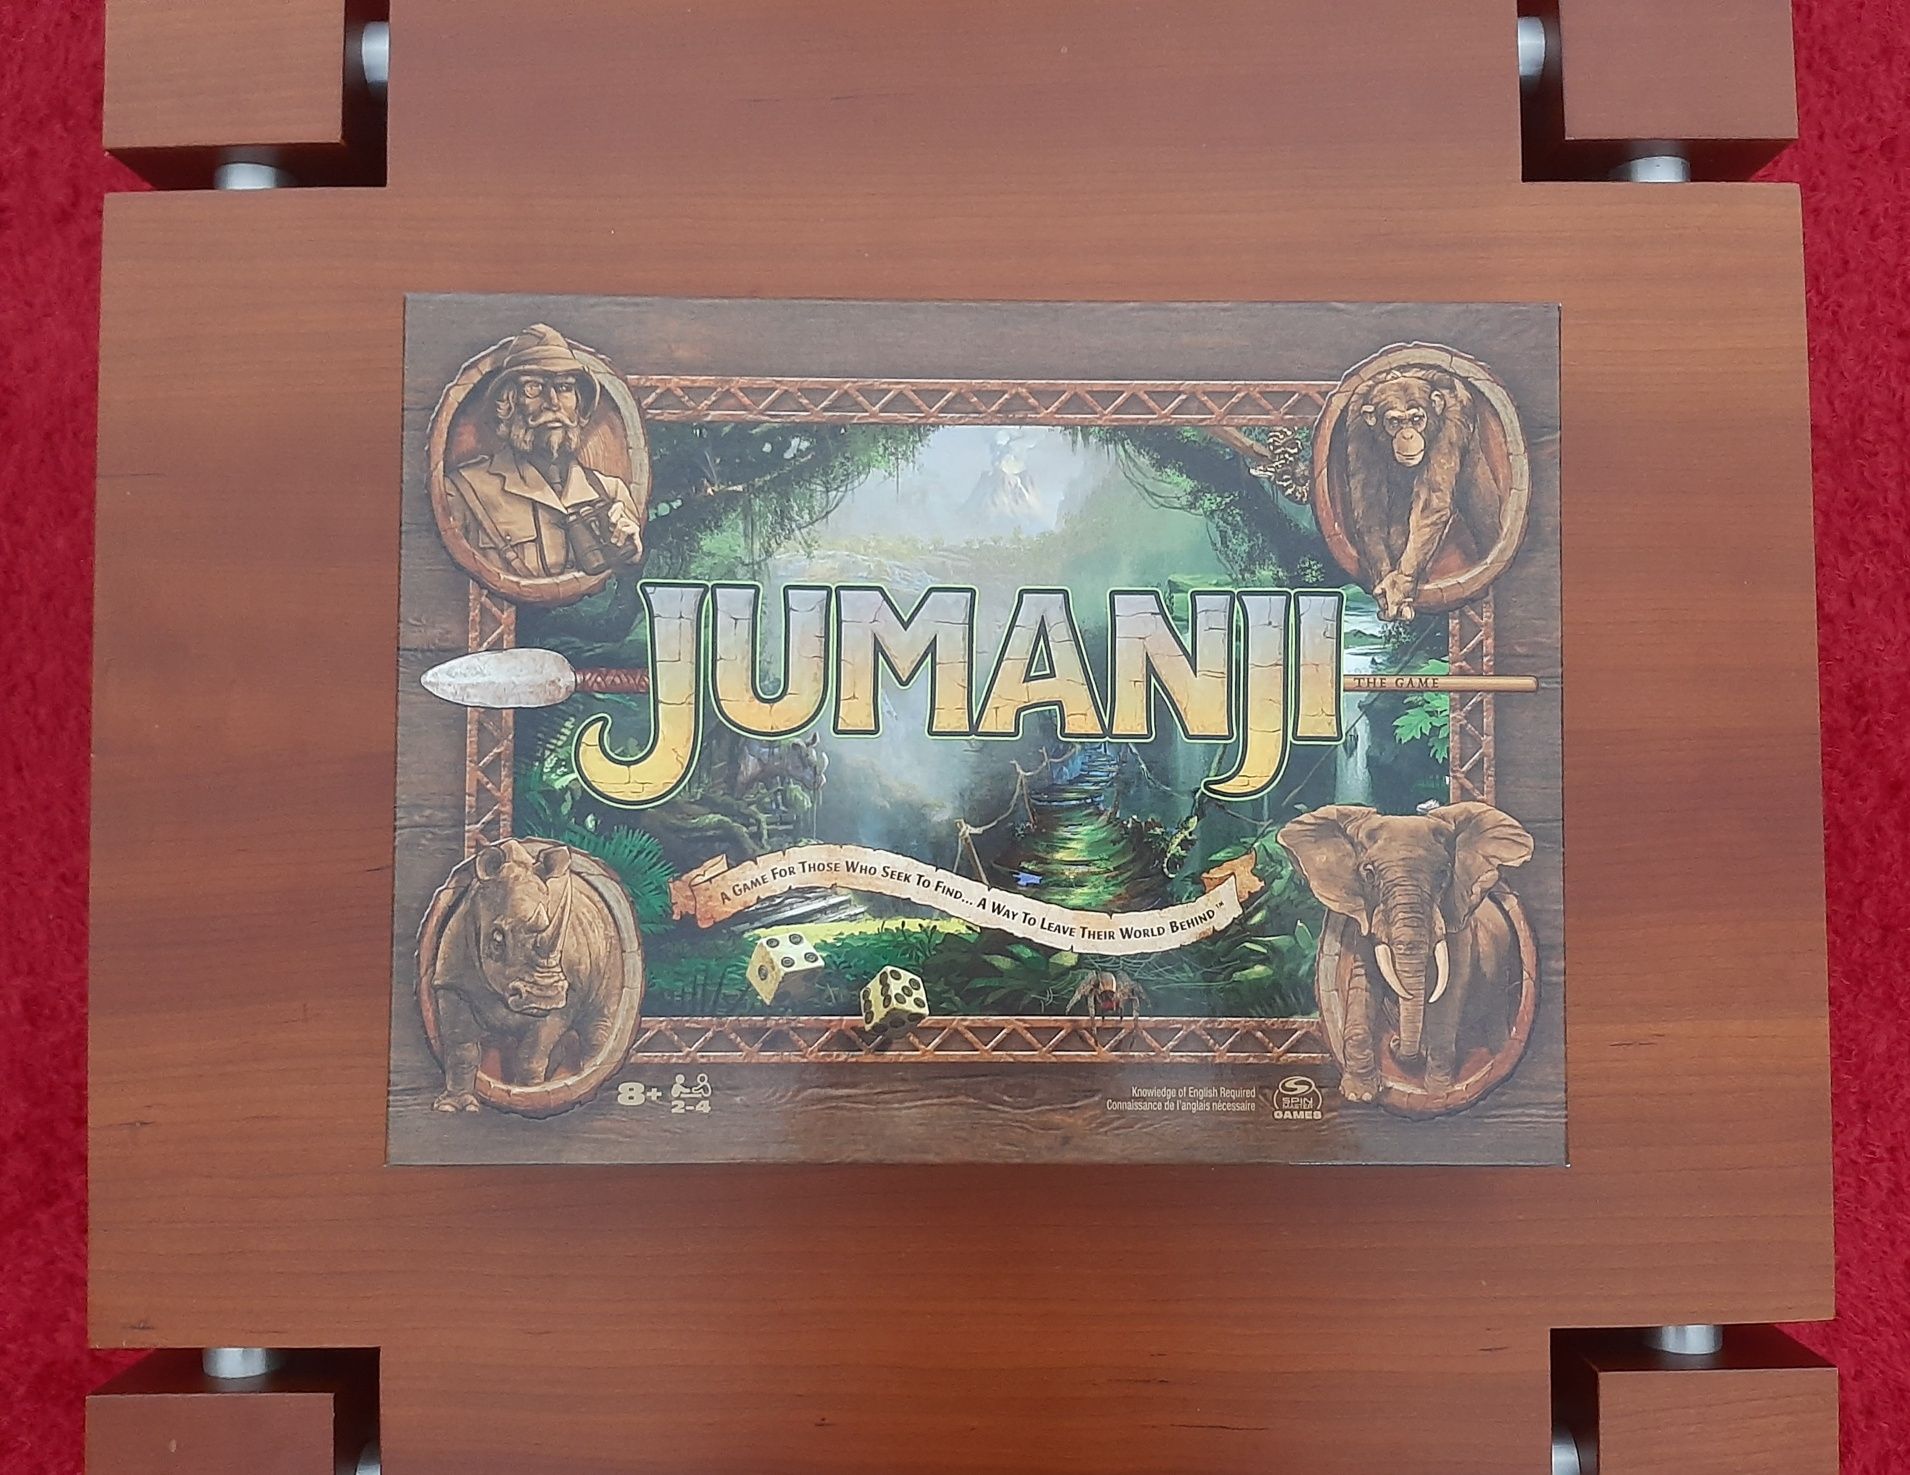 Jumanji: The Game